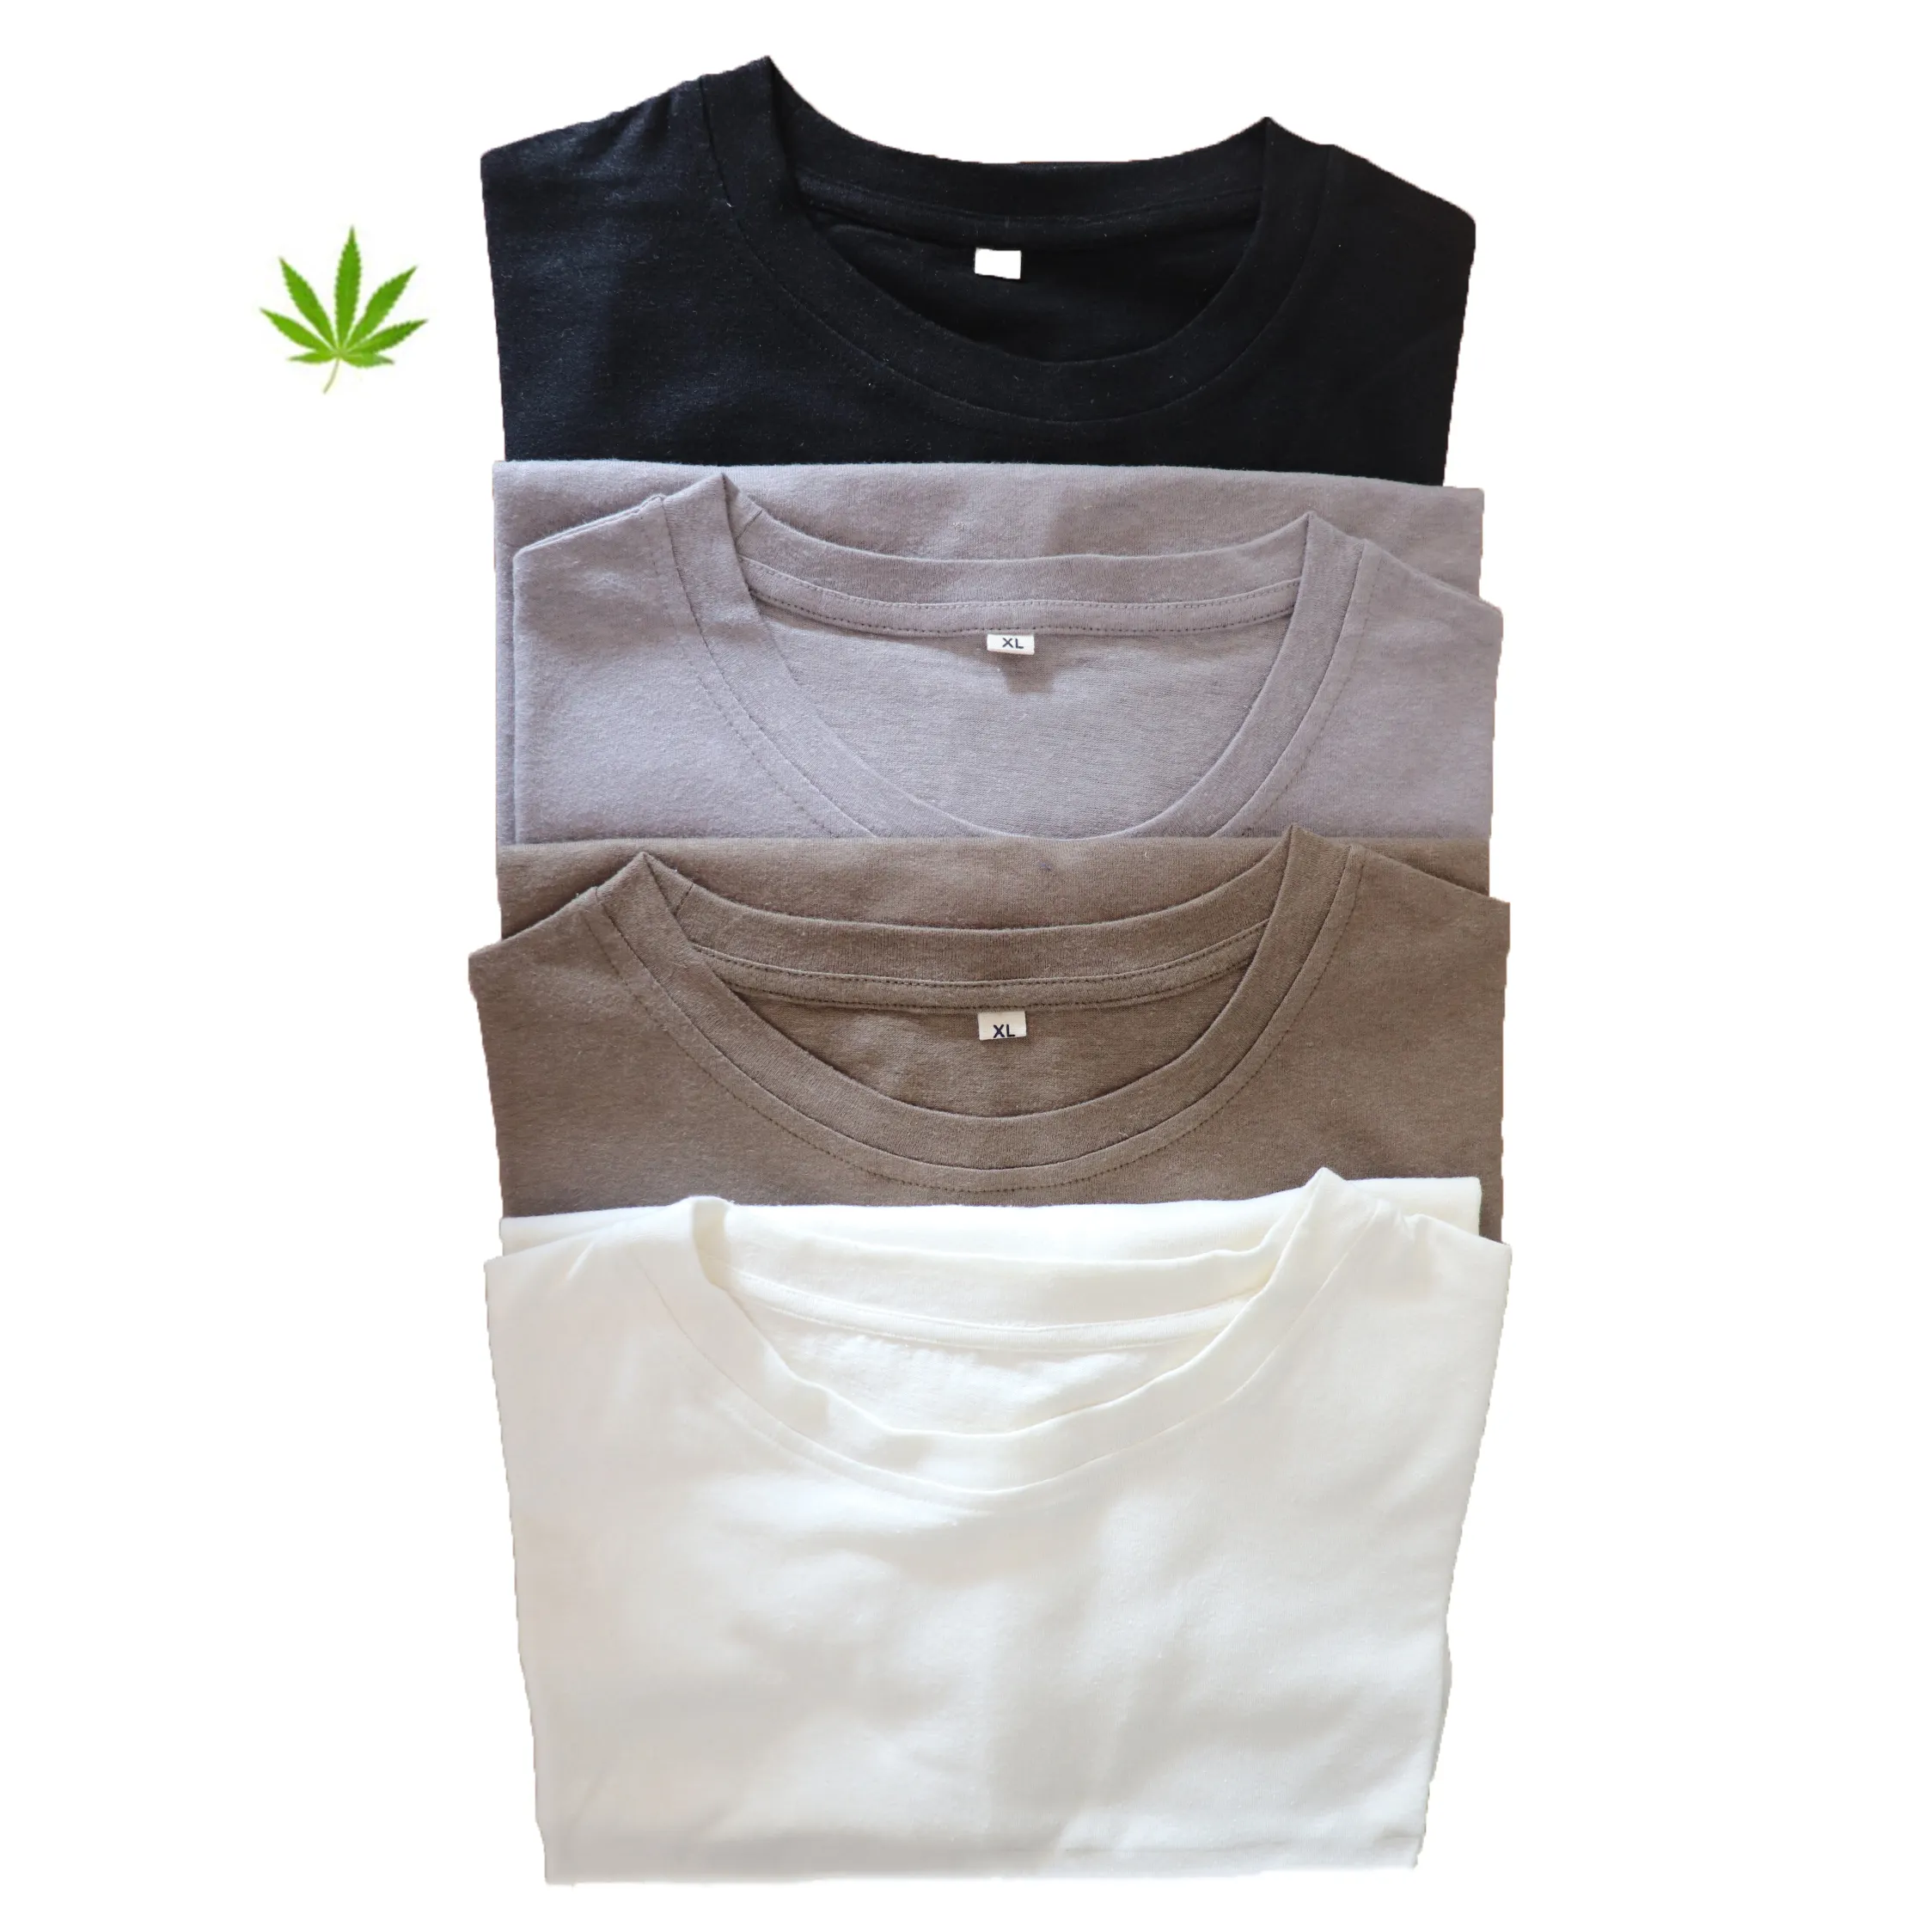 wholesale hemp clothing manufacture casual Black men's t-shirts unisex white men 55%hemp shirt